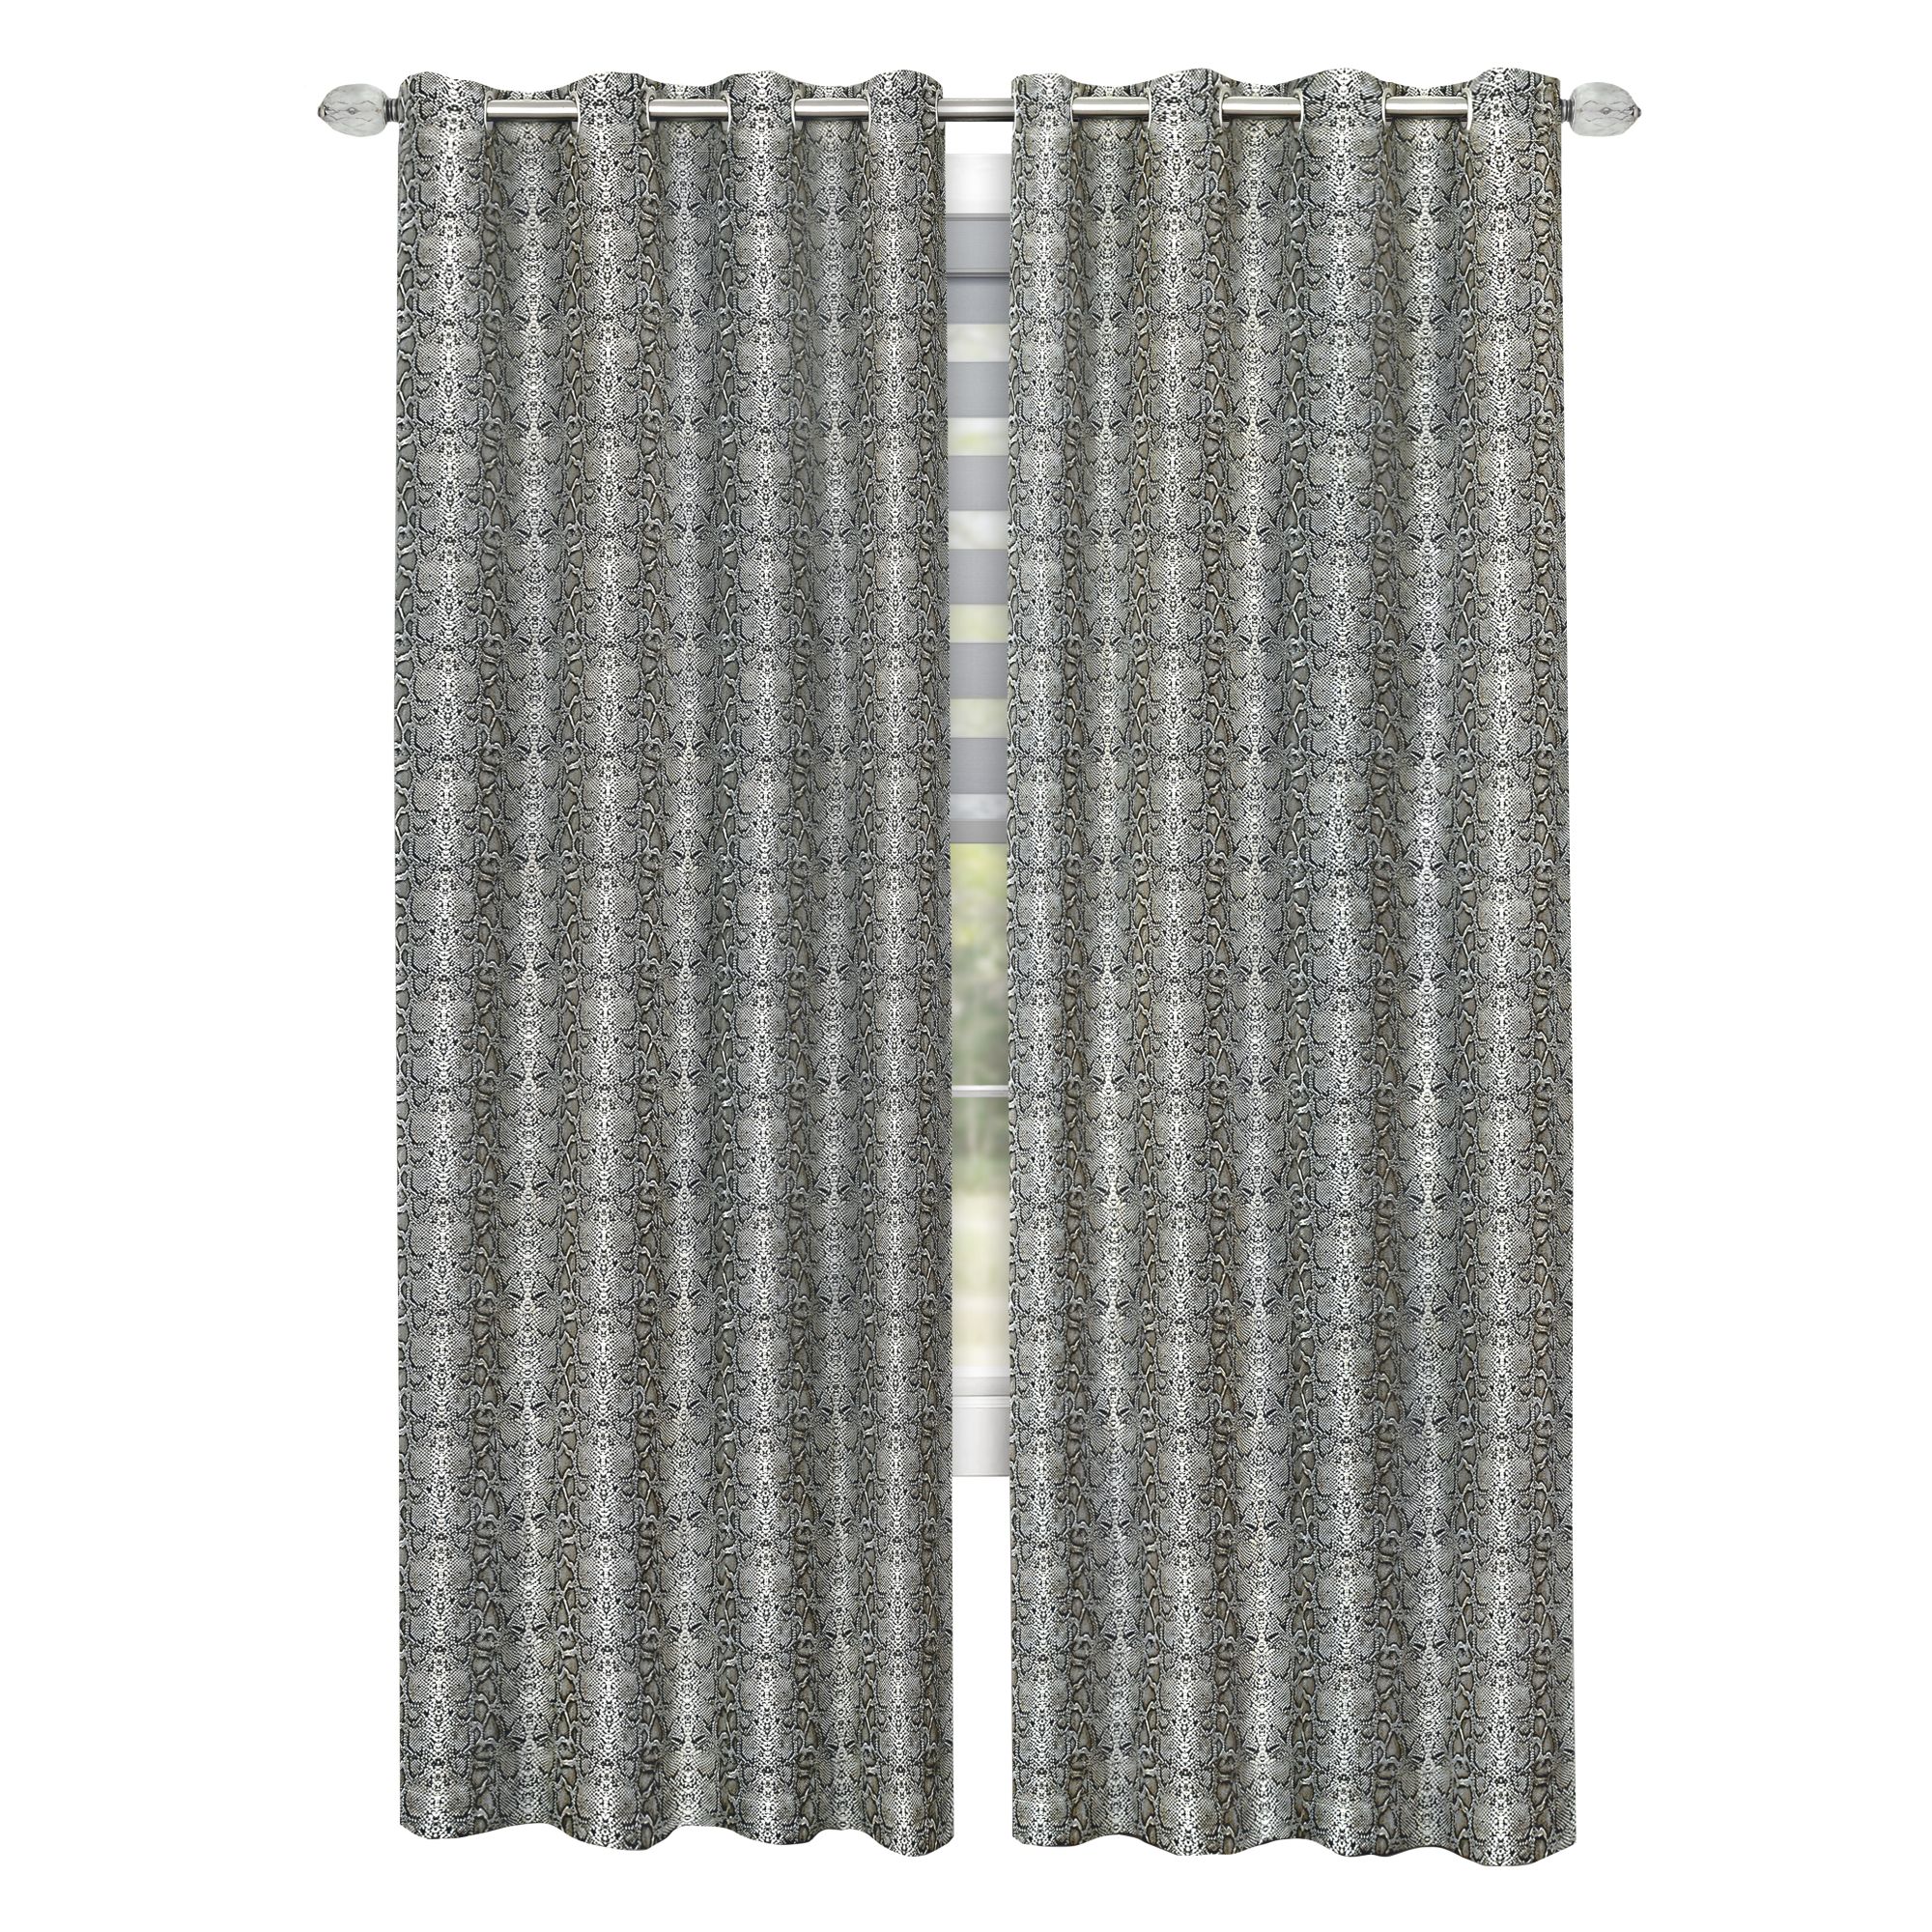 Achim Python Polyester Blackout Window Curtain Panel, Black/Silver, 52" x 84" - image 2 of 5